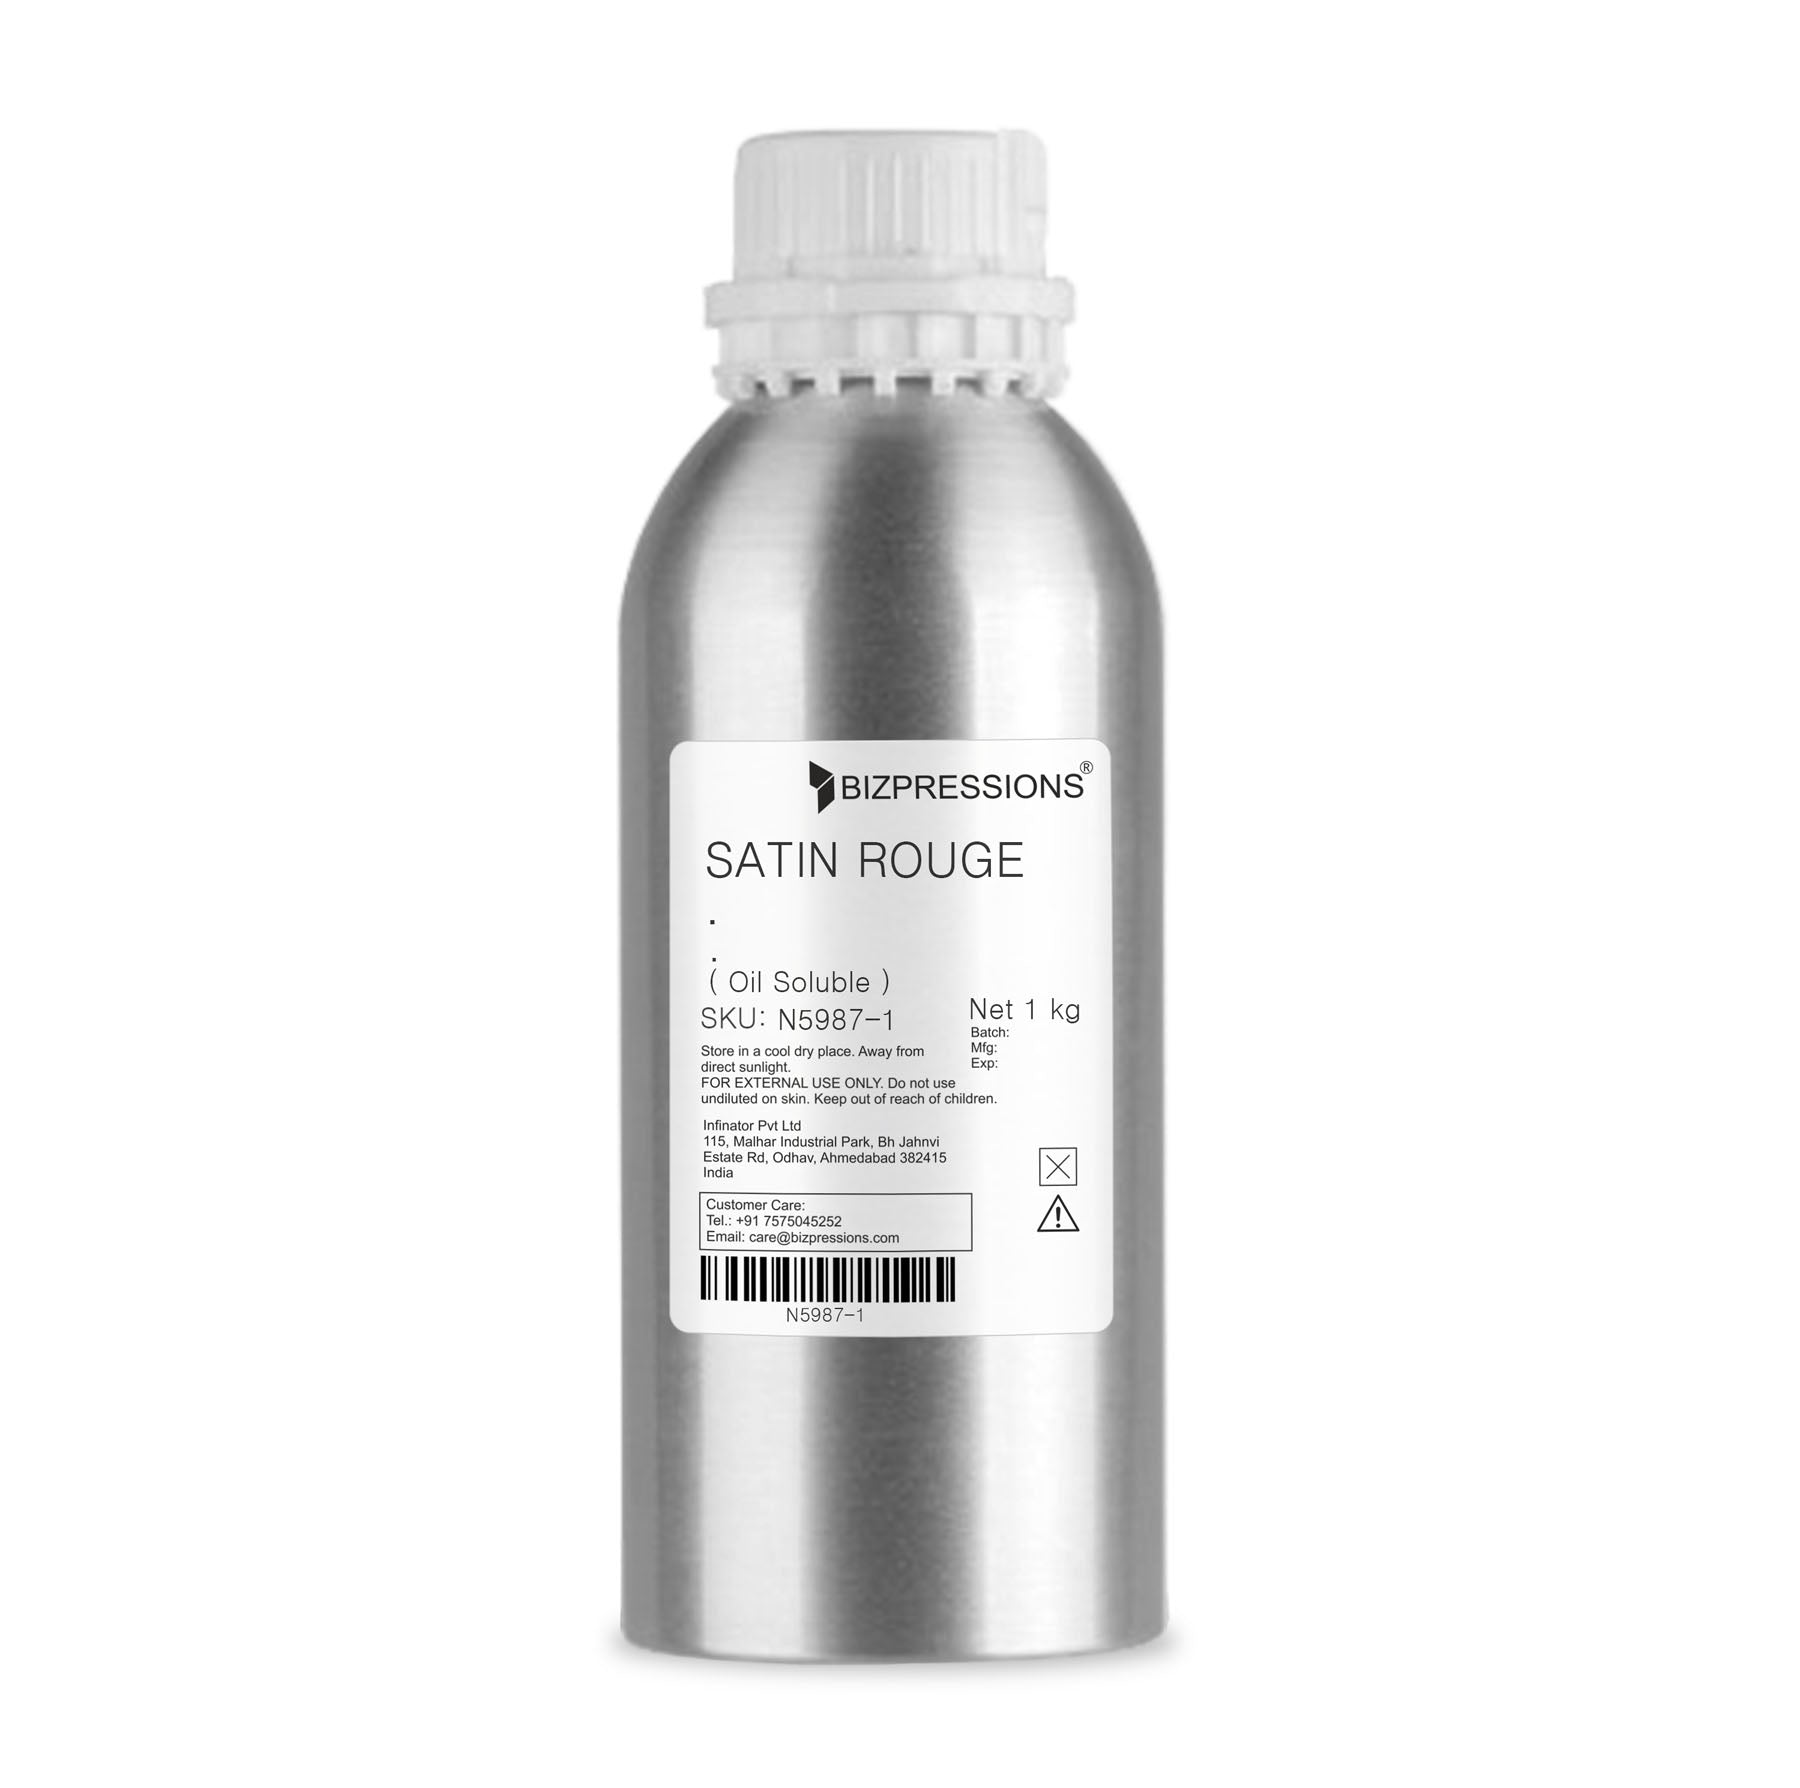 SATIN ROUGE - Fragrance ( Oil Soluble ) - 1 kg